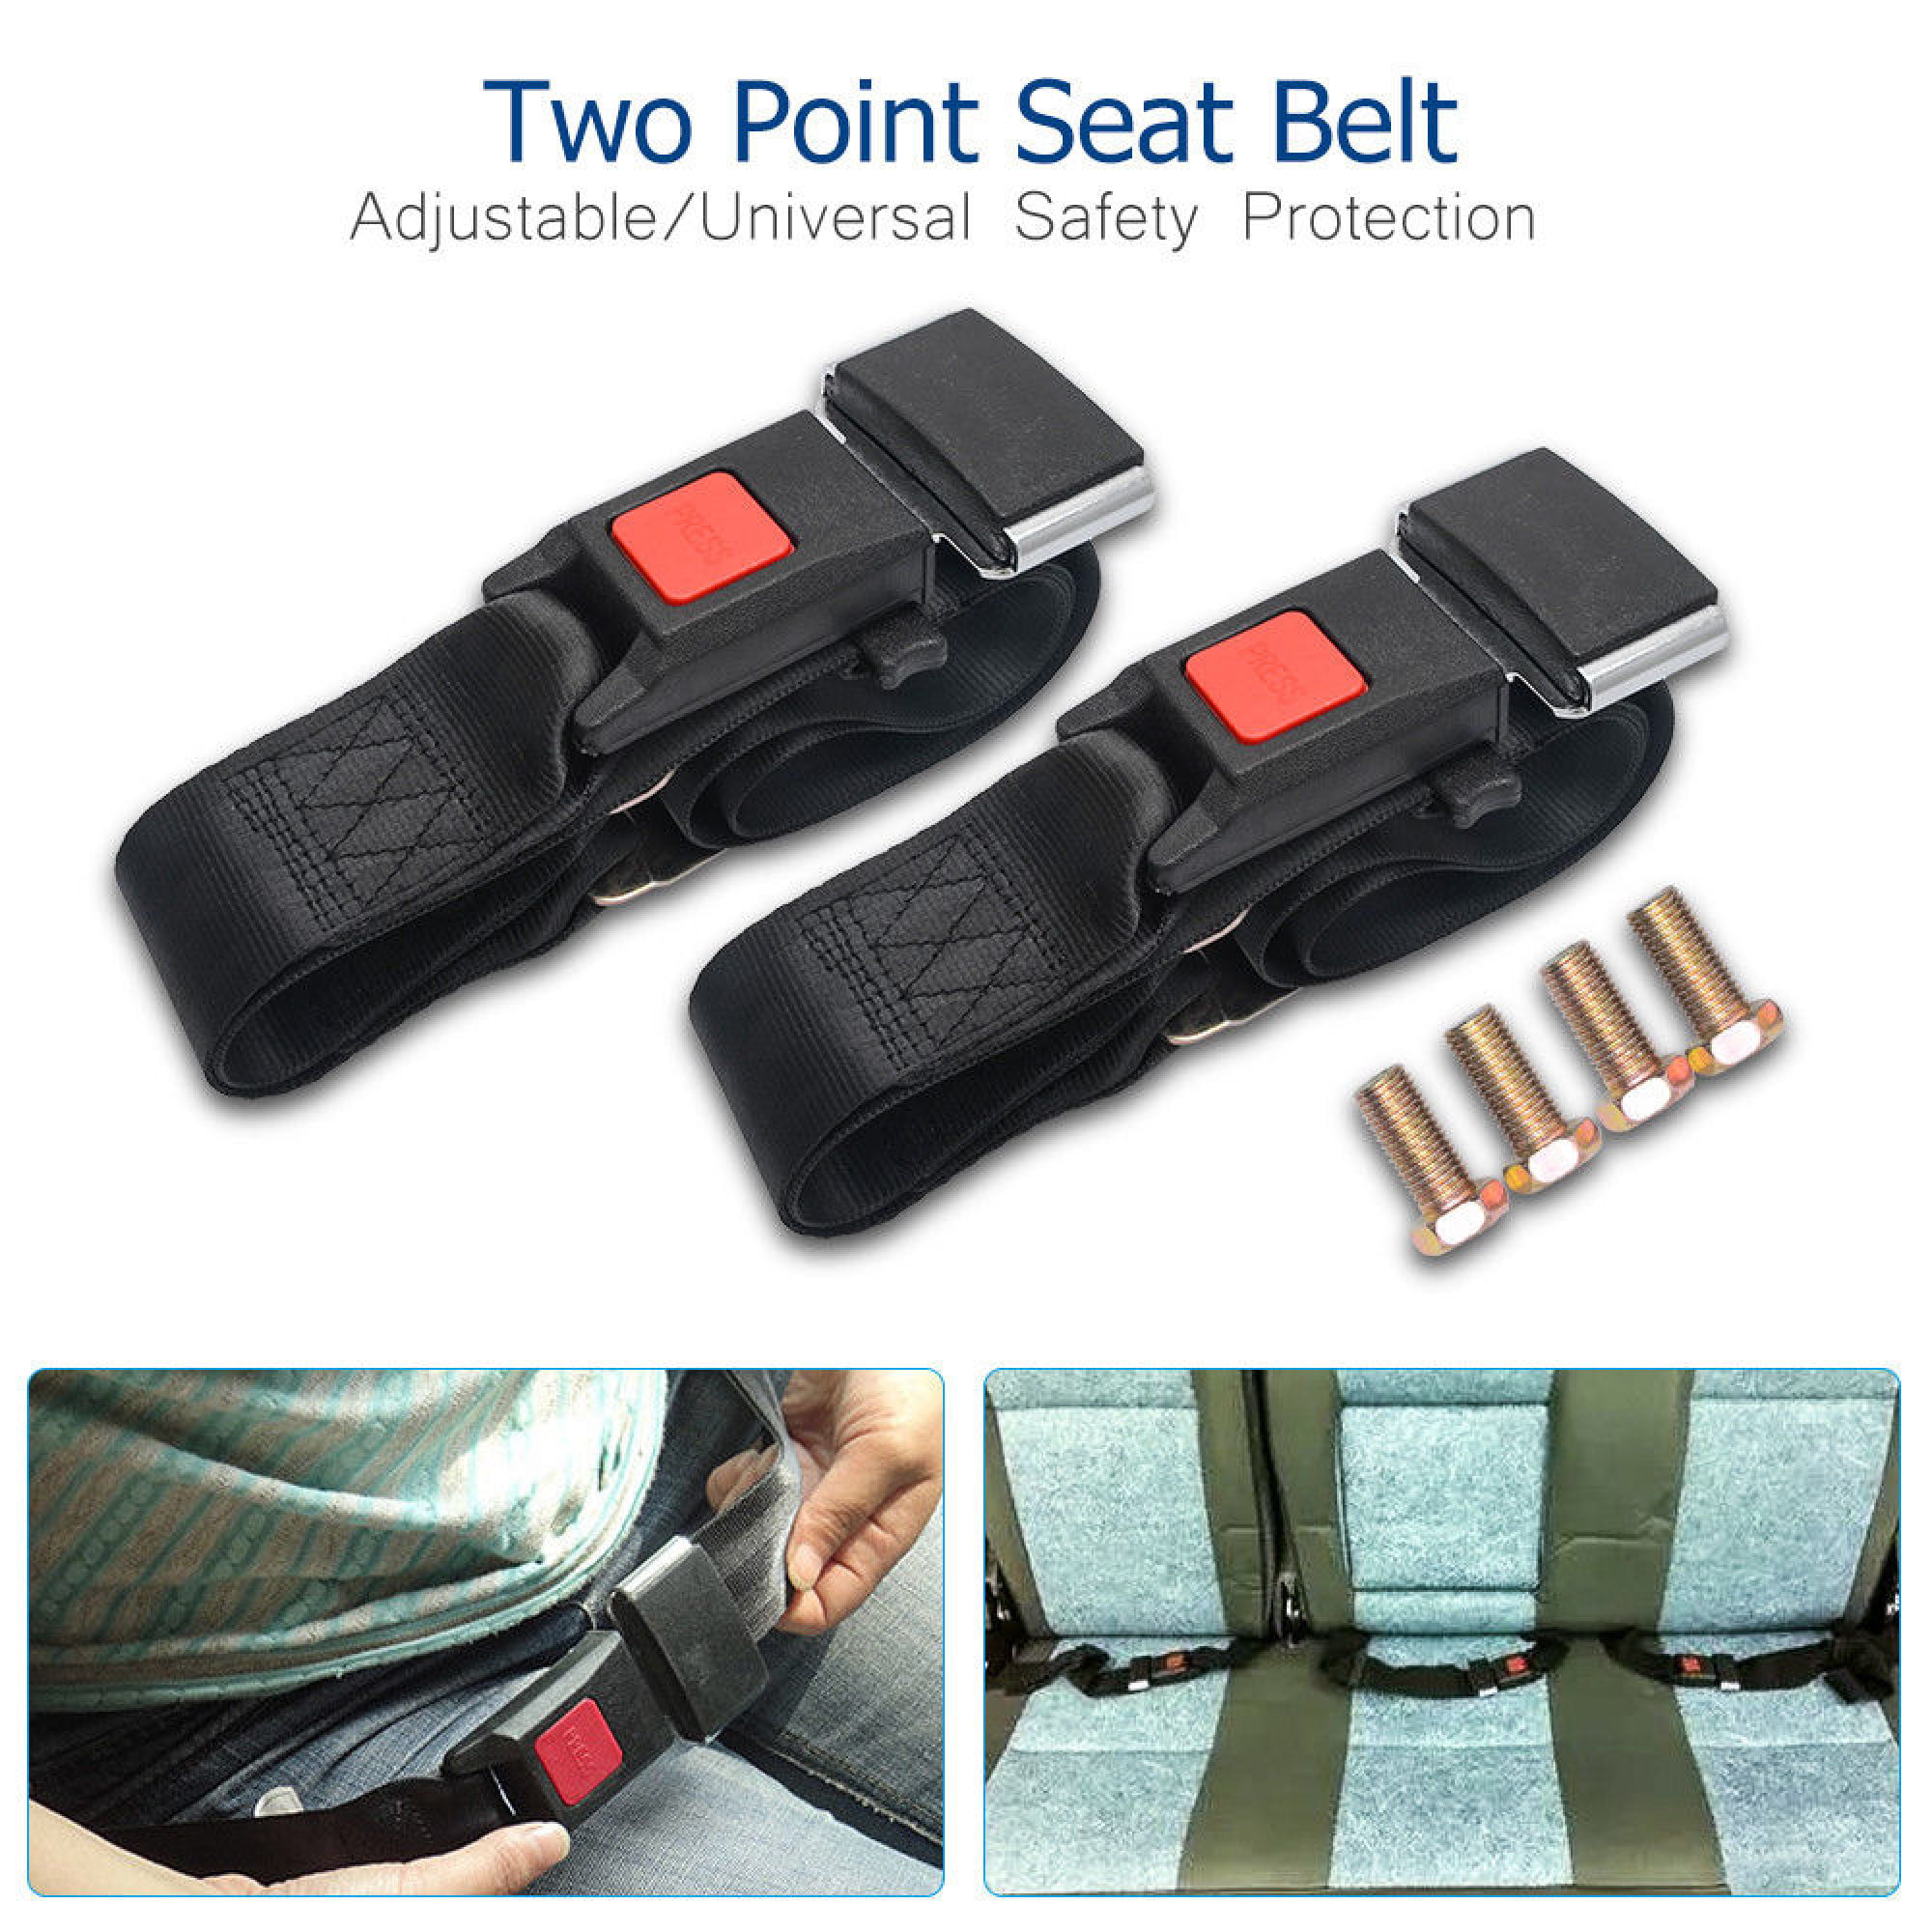 2 Kits Universal Strap Retractable Car Trucks Safety Seat Belt Black 2 Point 